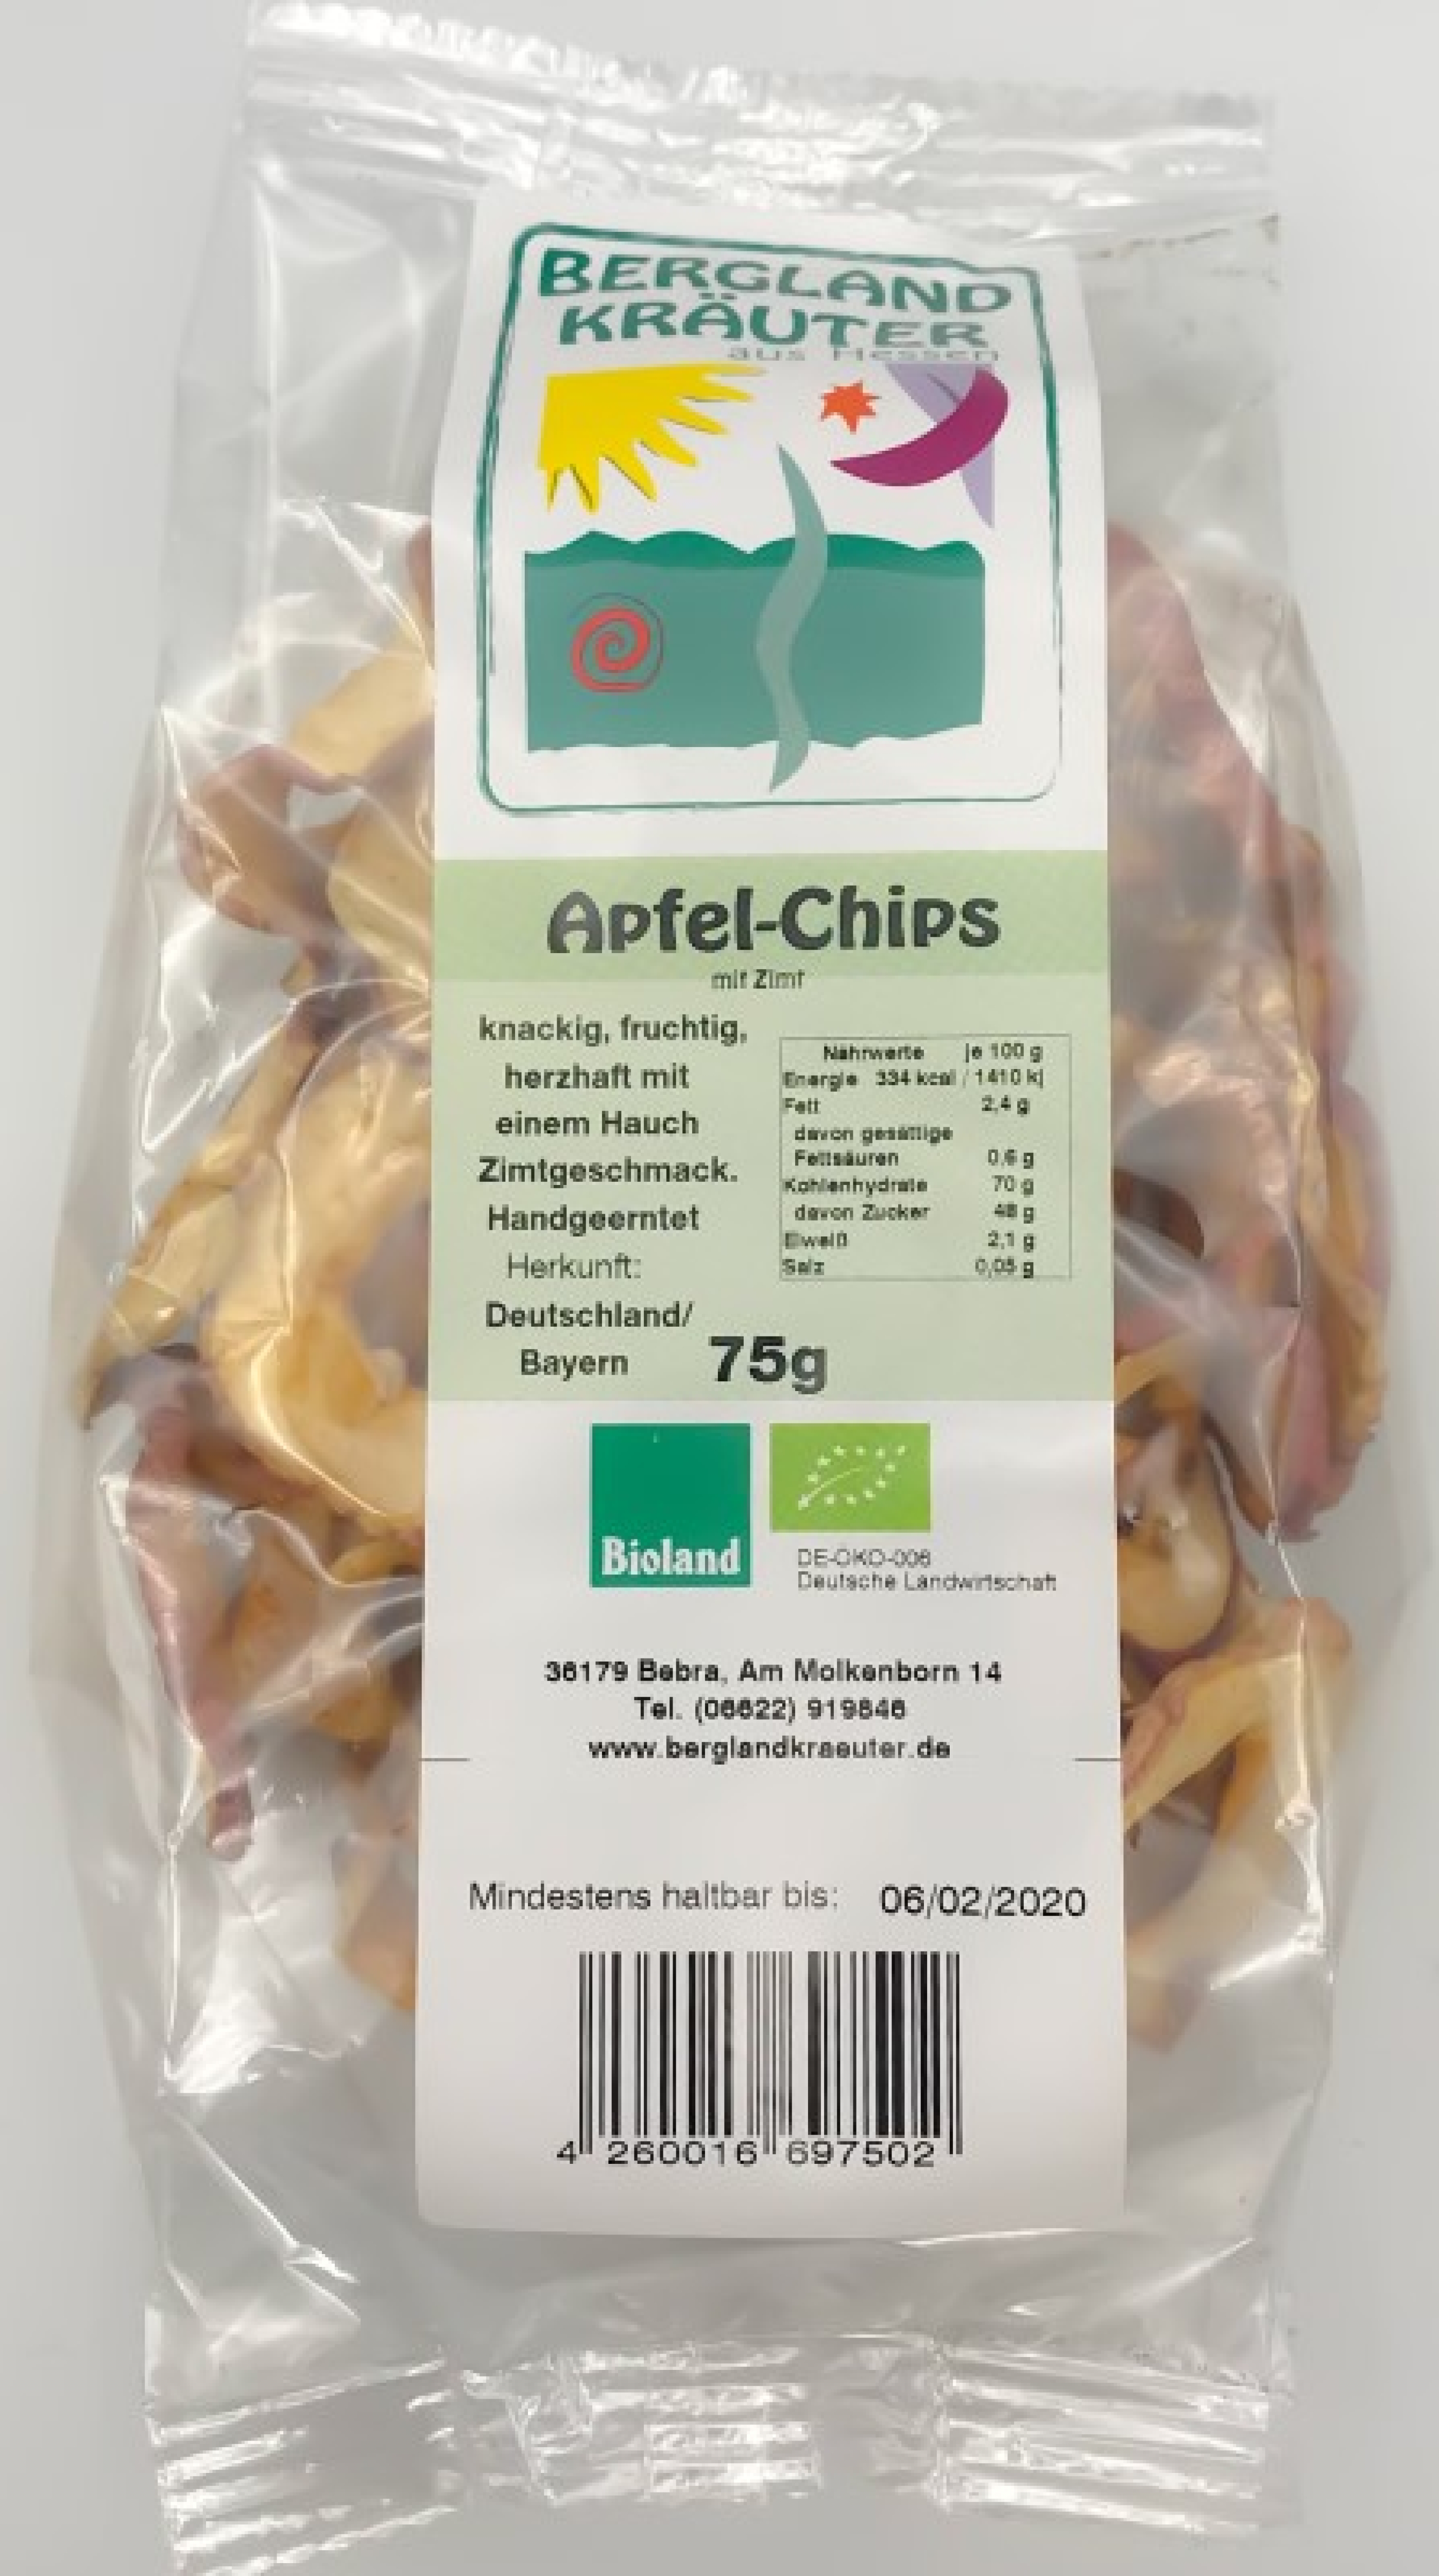 Berglandkräuter aus Hessen - Apfel-Chips mit Zimt, 75 g